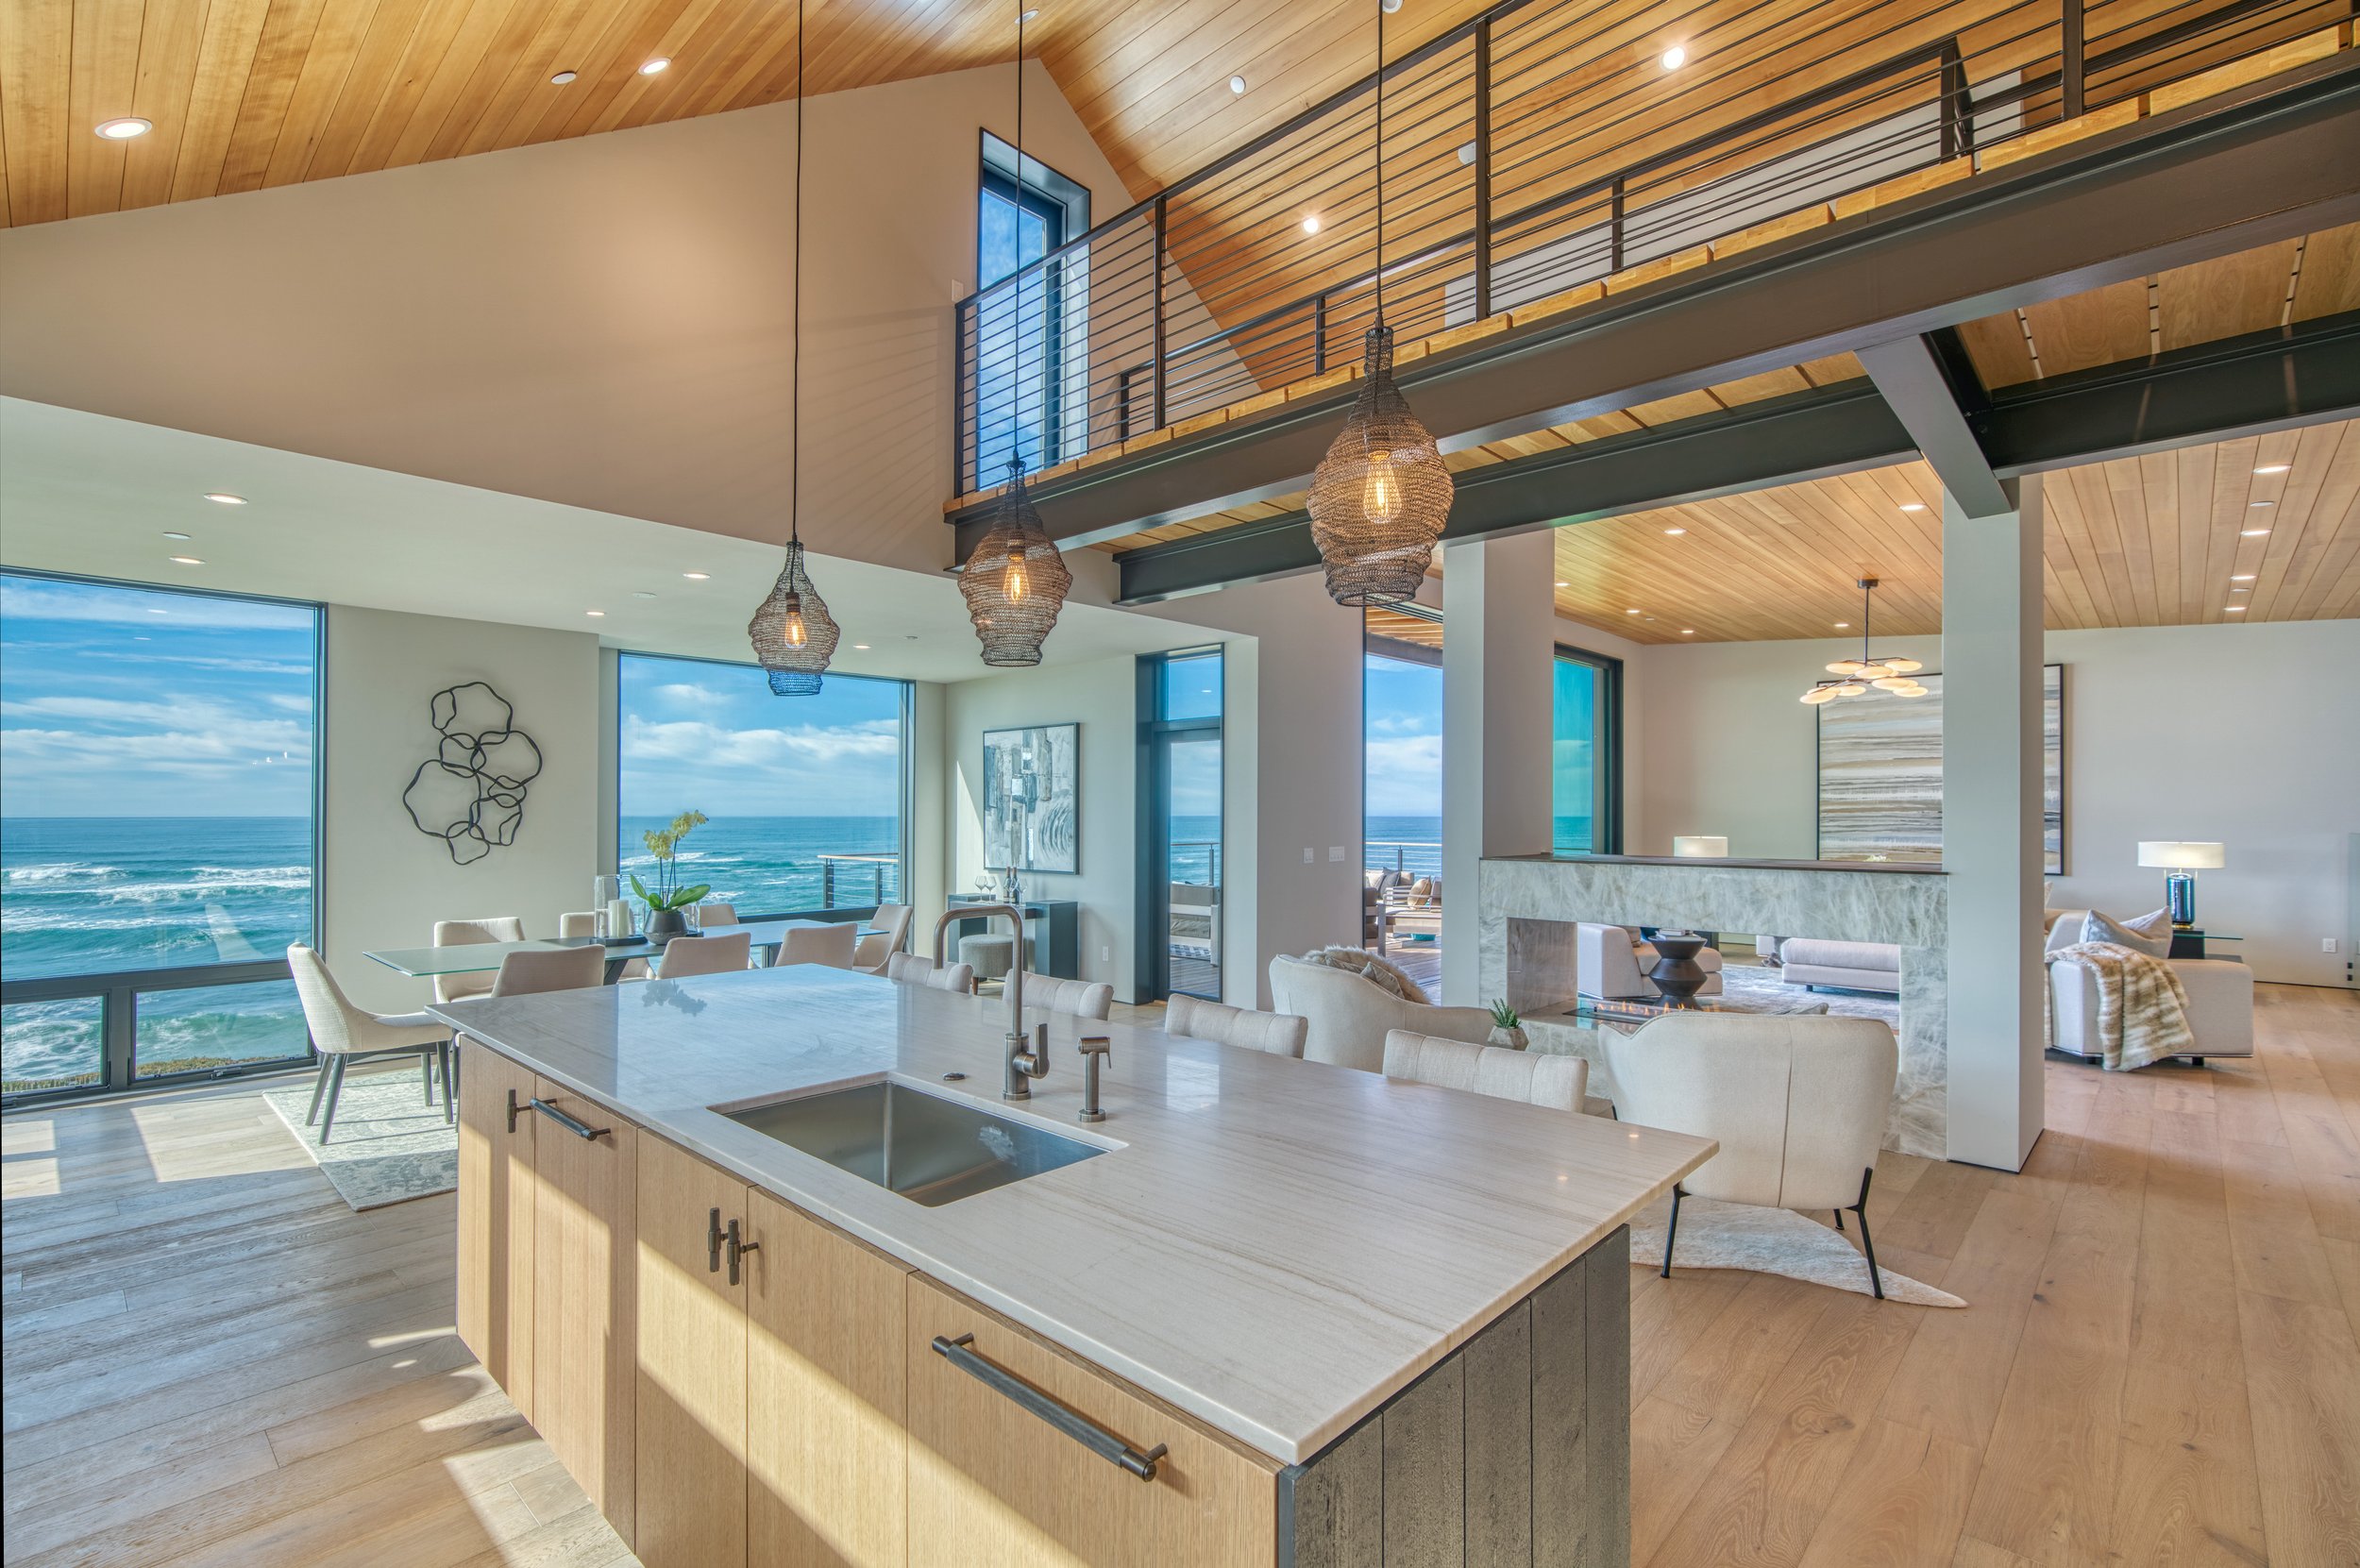 10-modern-kitchen-great-room-ocean-views.jpg